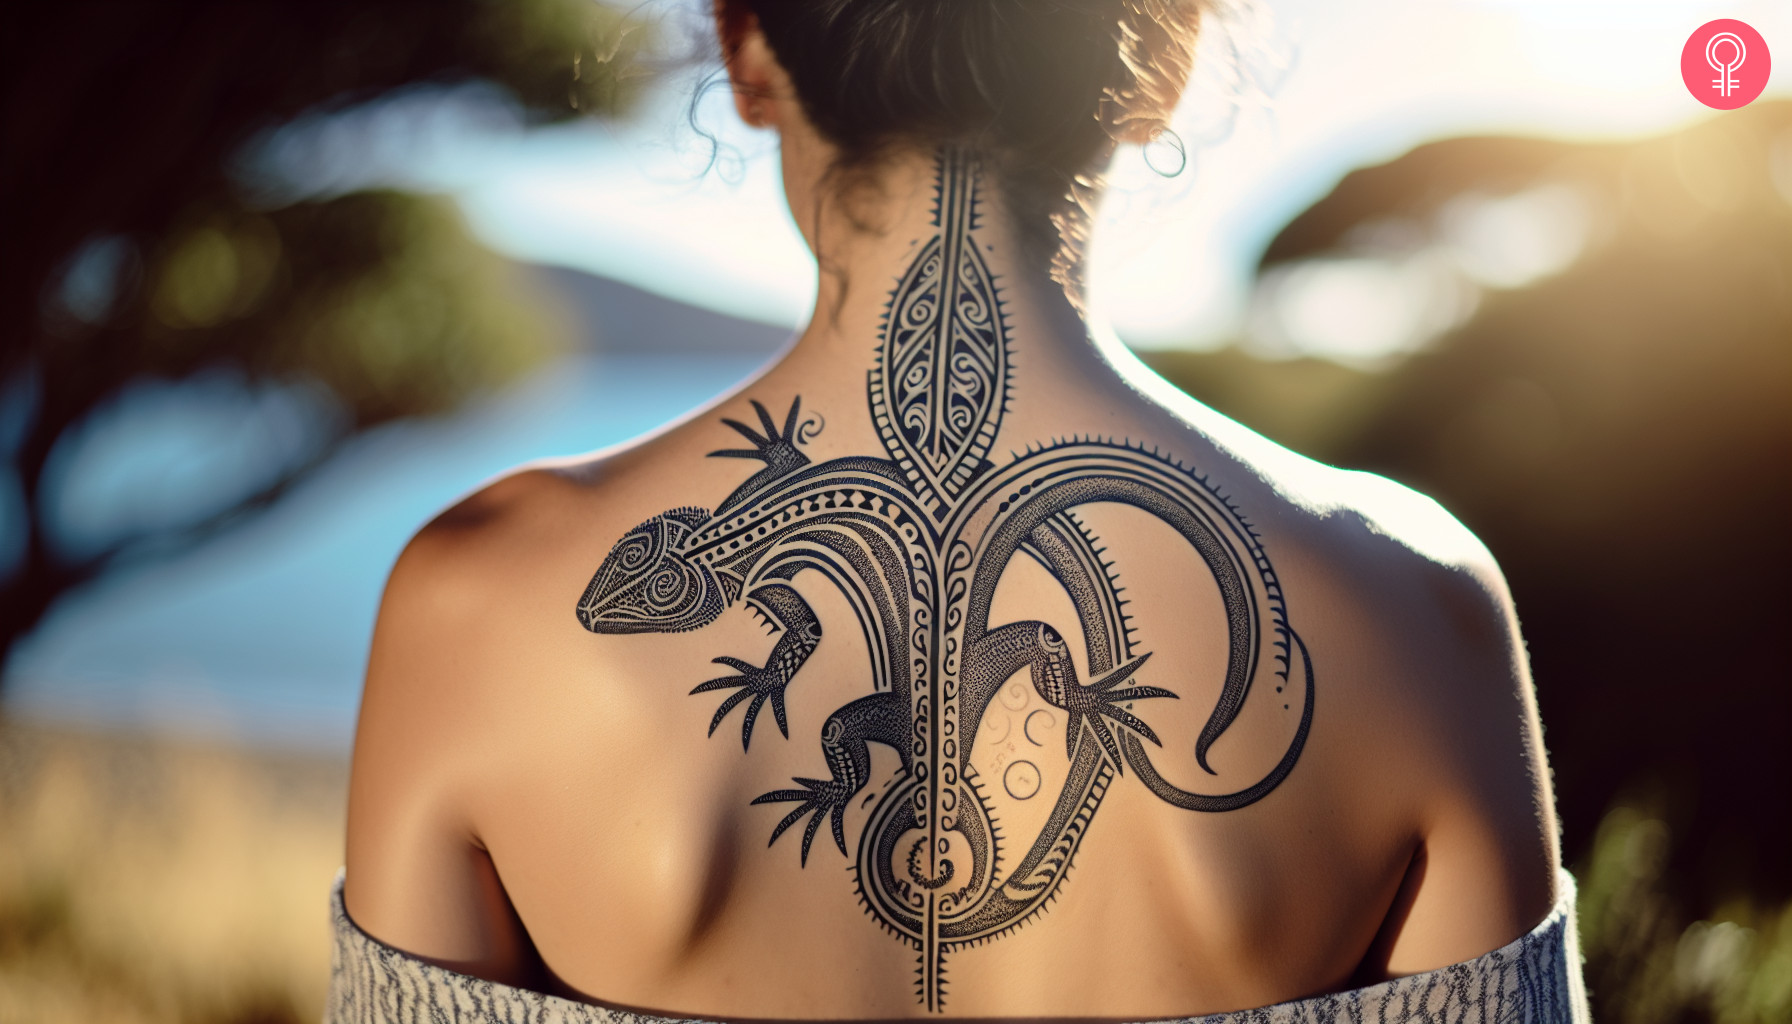 Lizard maori tattoo design on the upper back of a woman